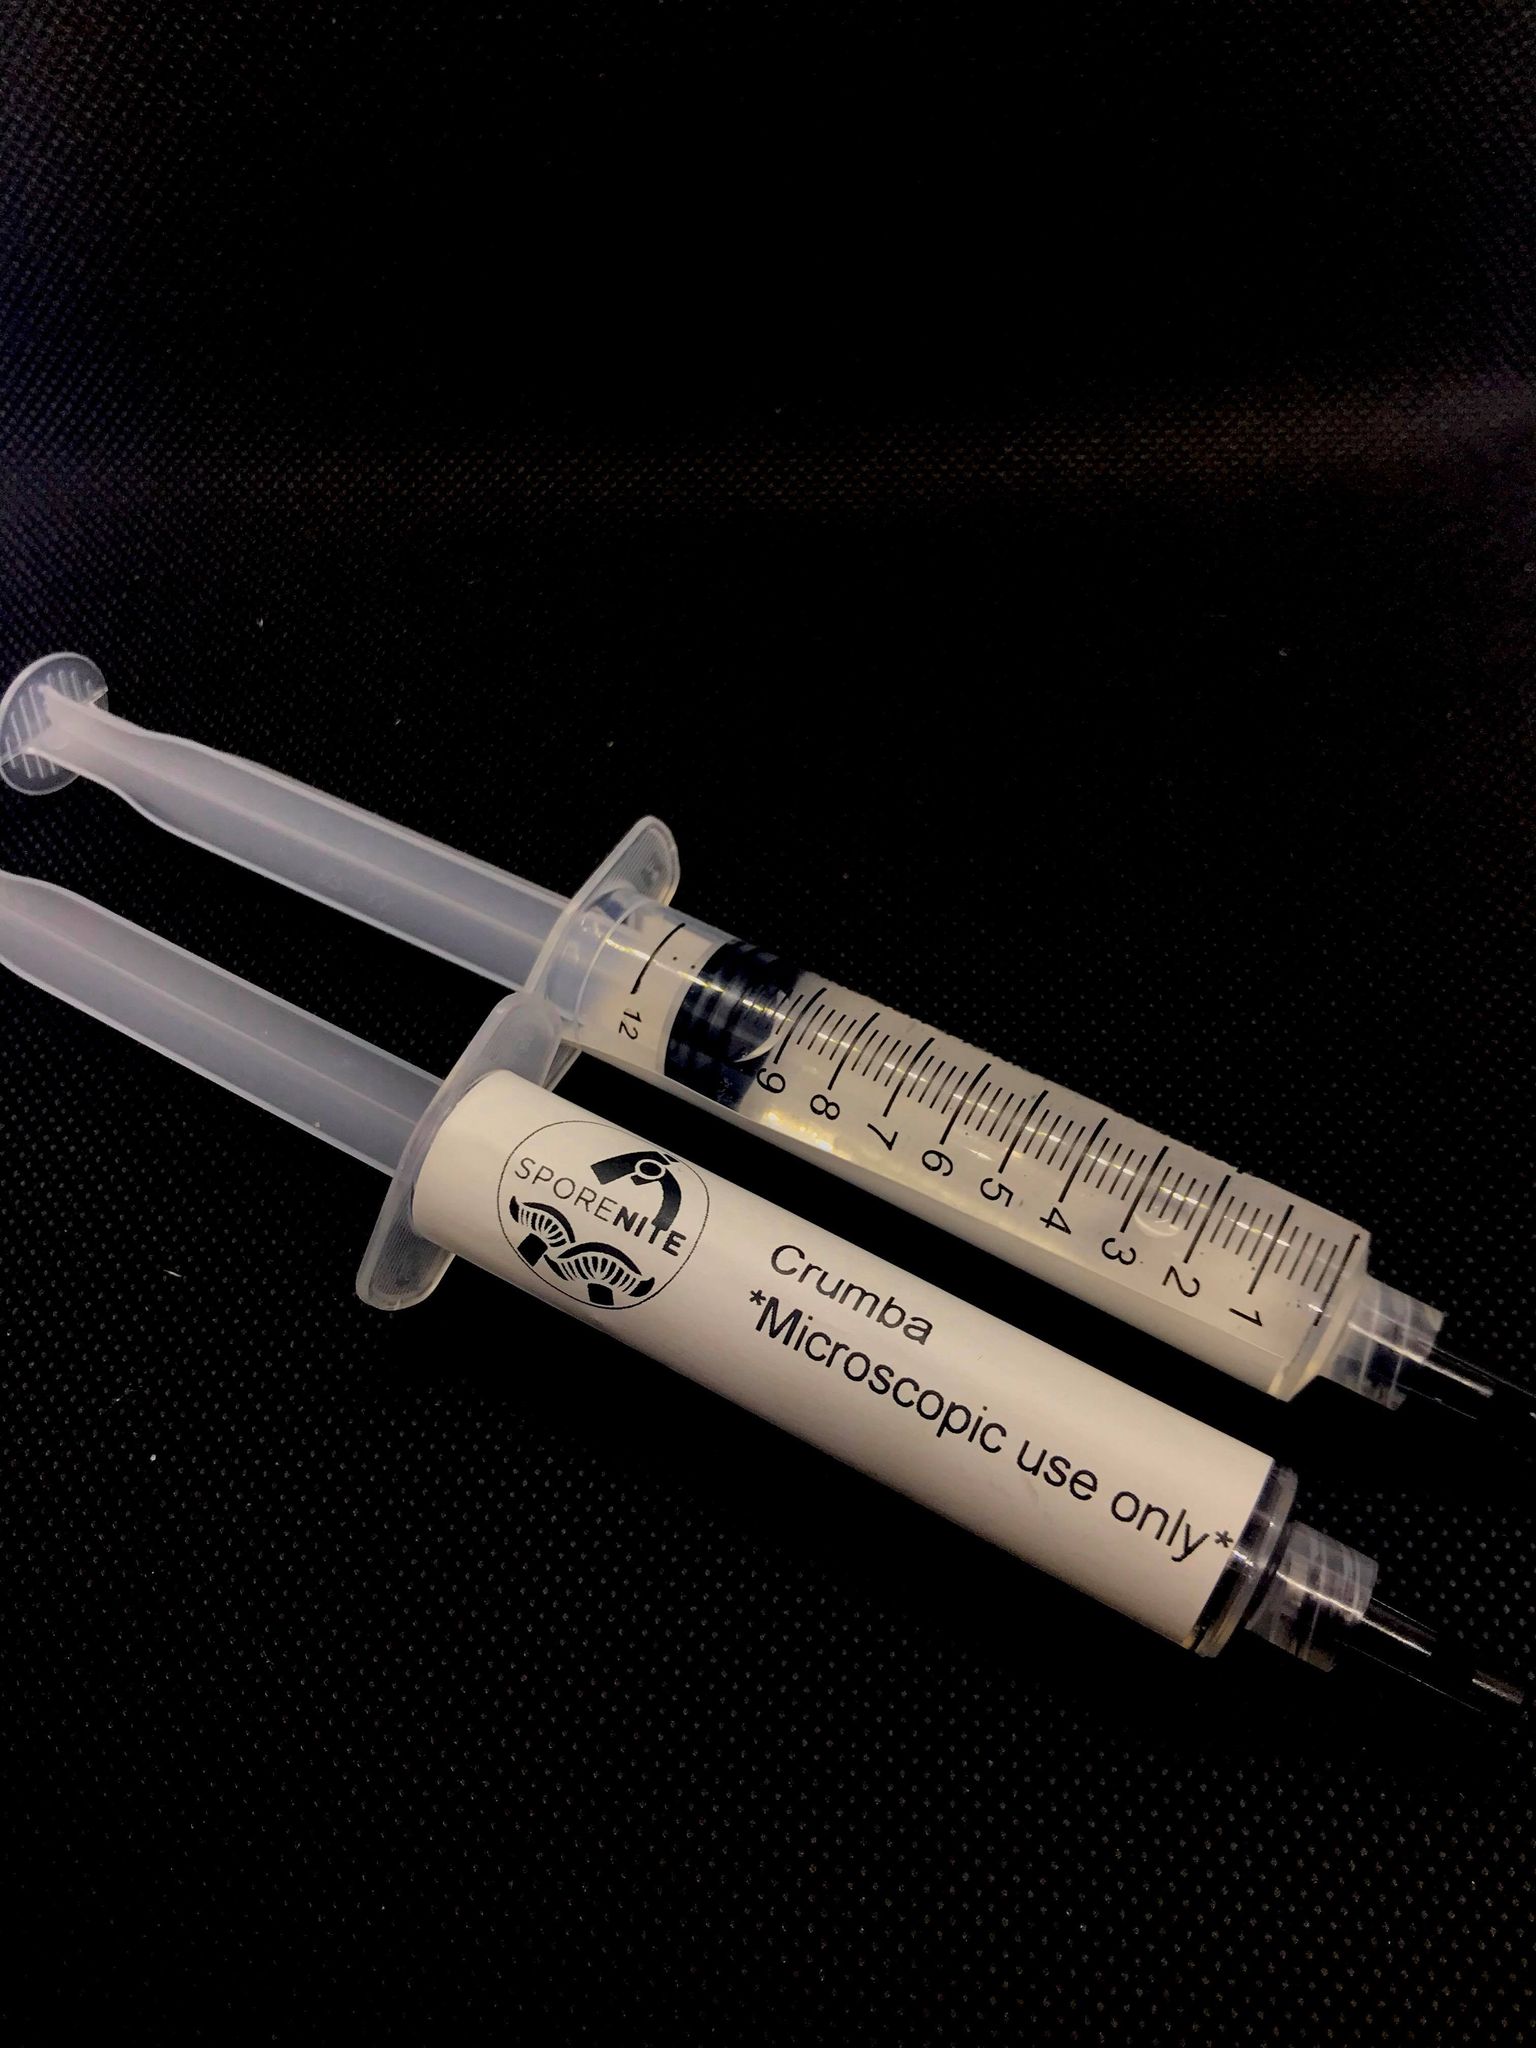 spore syringe